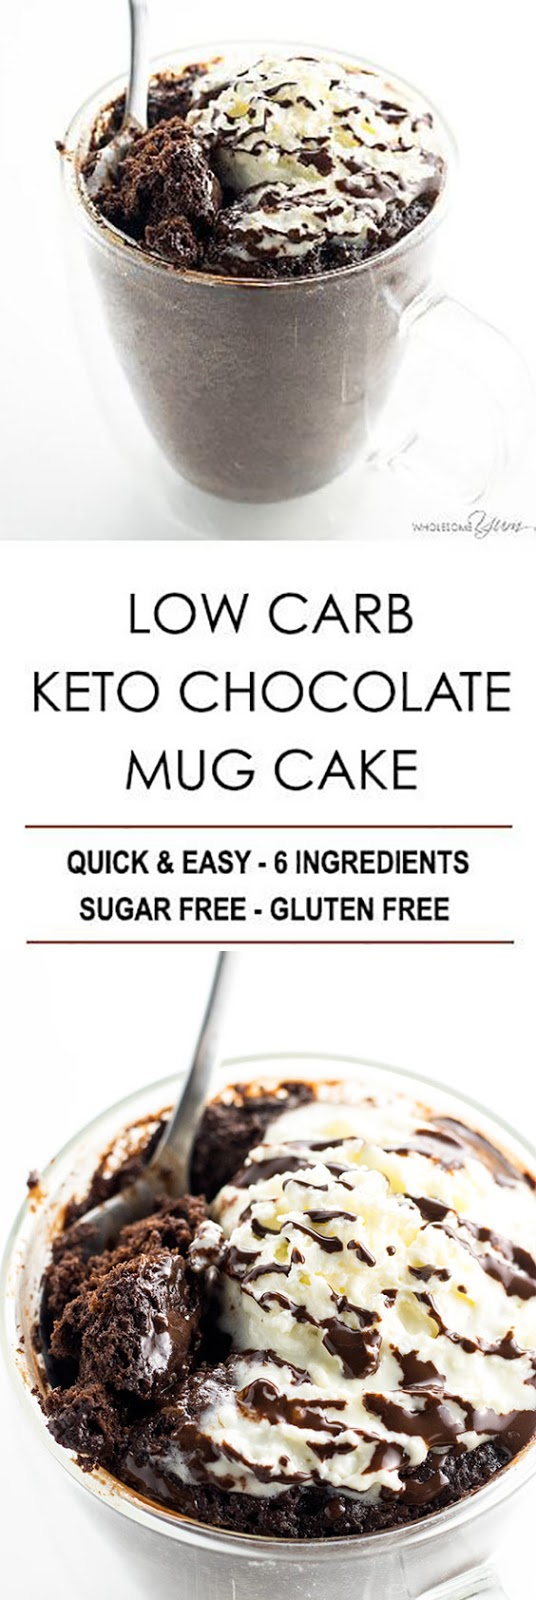 Low Carb Paleo Keto Chocolate Mug Cake Recipe